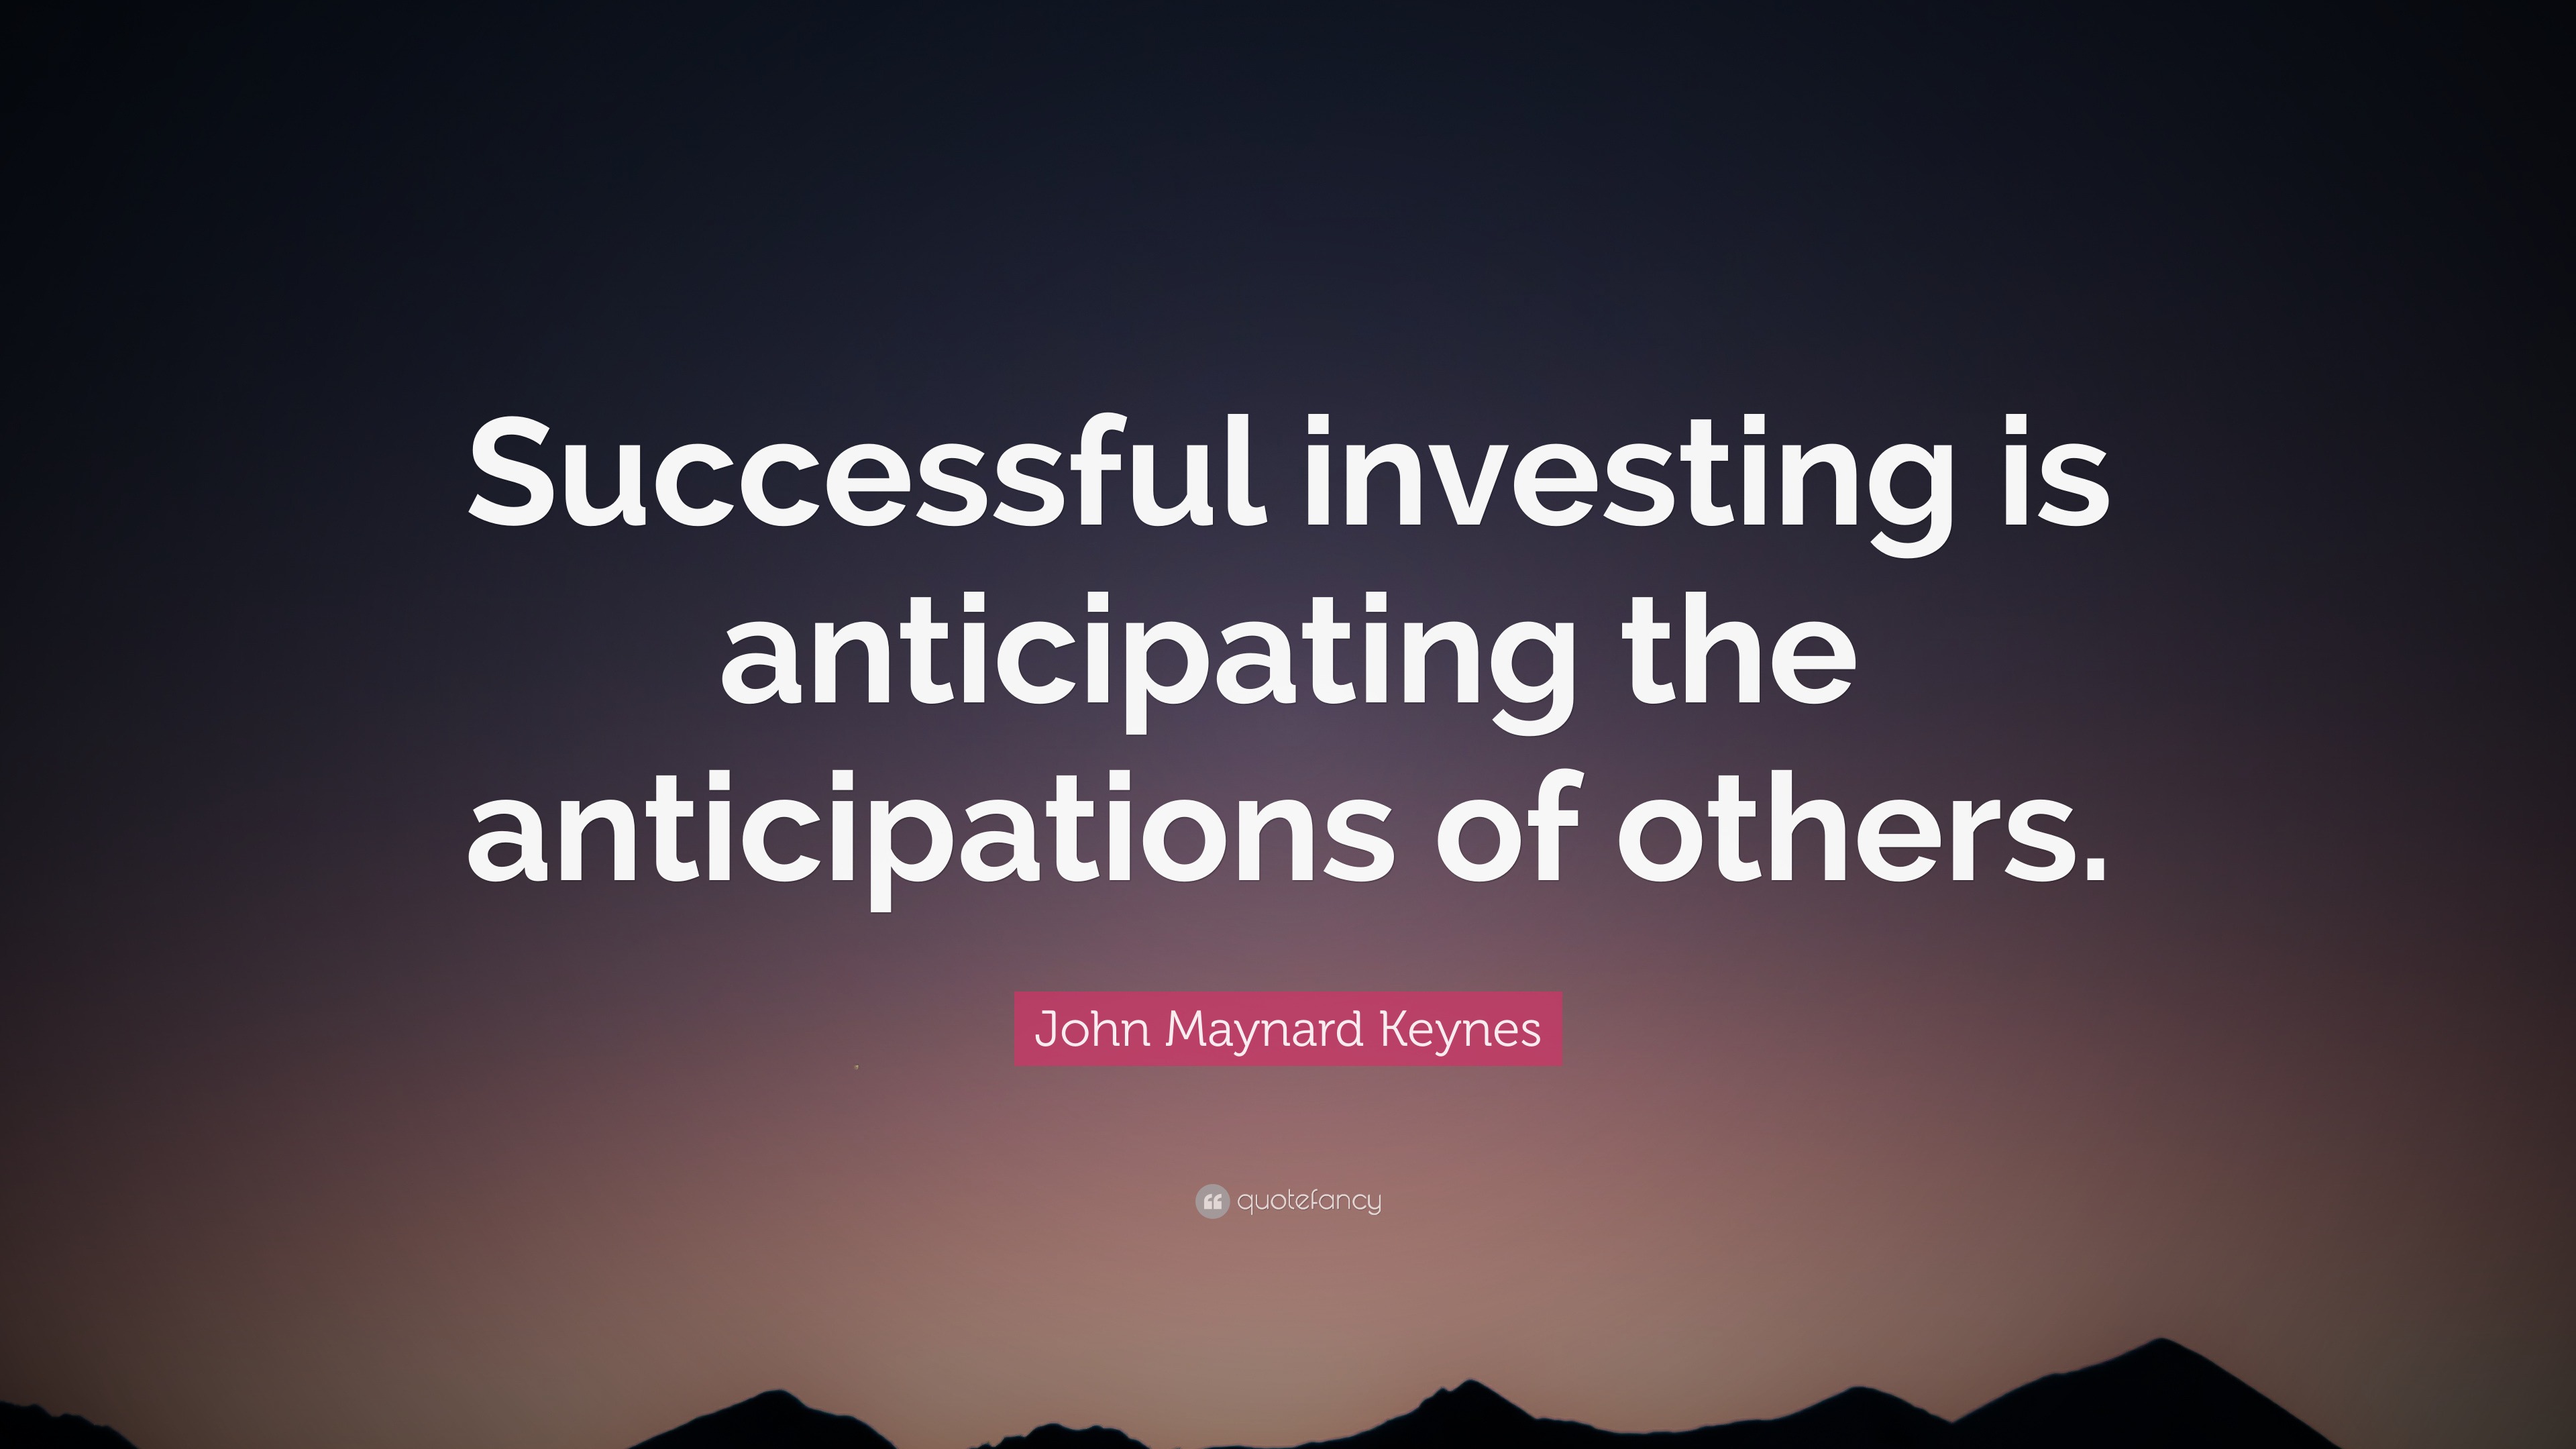 John Maynard Keynes Quote “Successful investing is